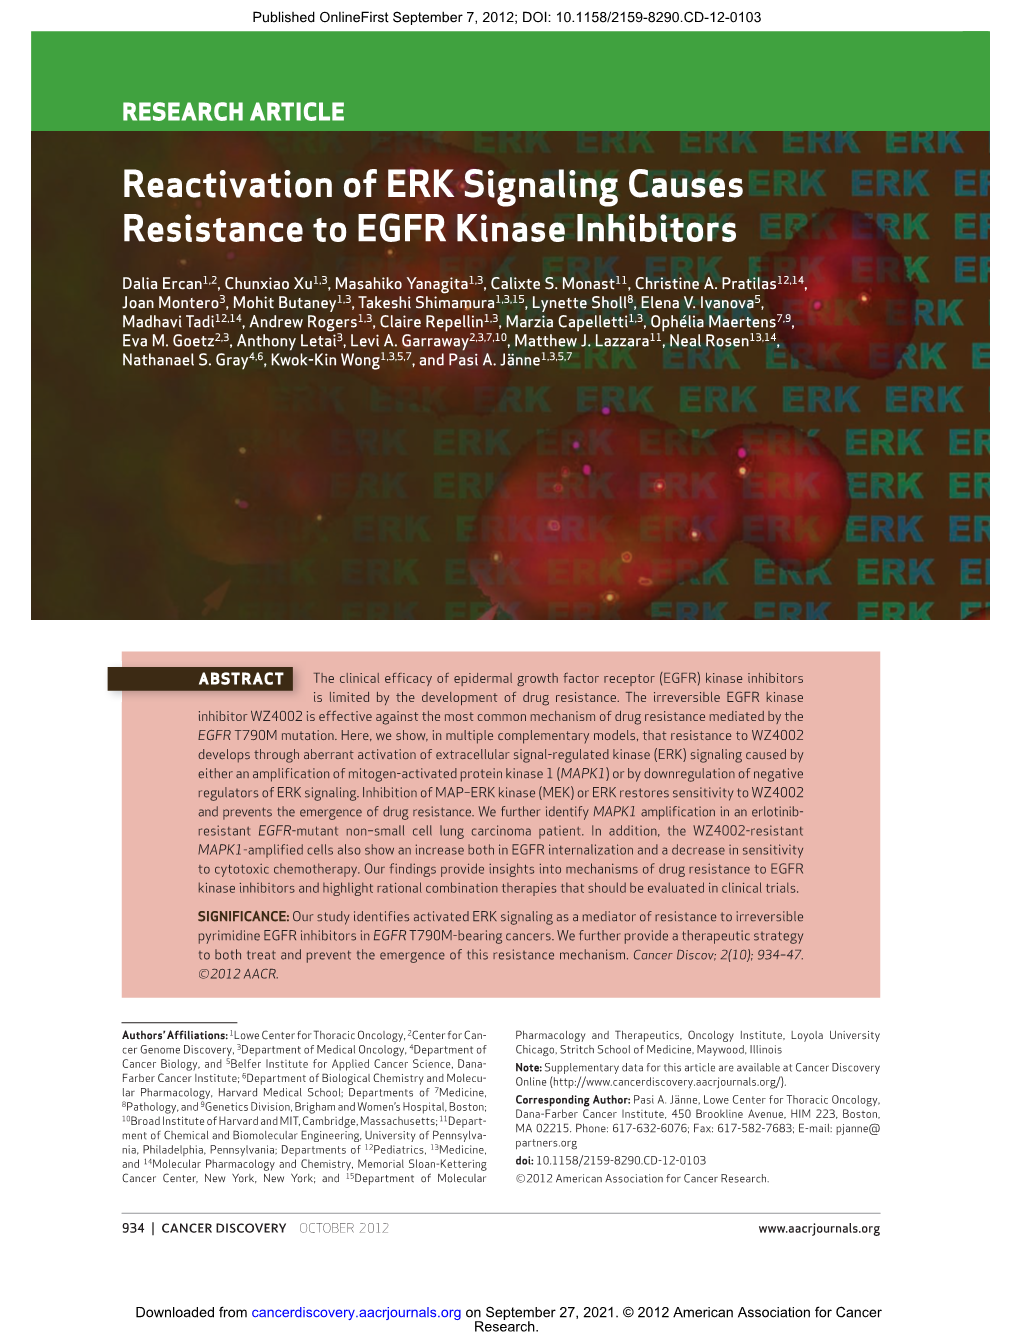 Reactivation of ERK Signaling Causes Resistance to EGFR Kinase Inhibitors